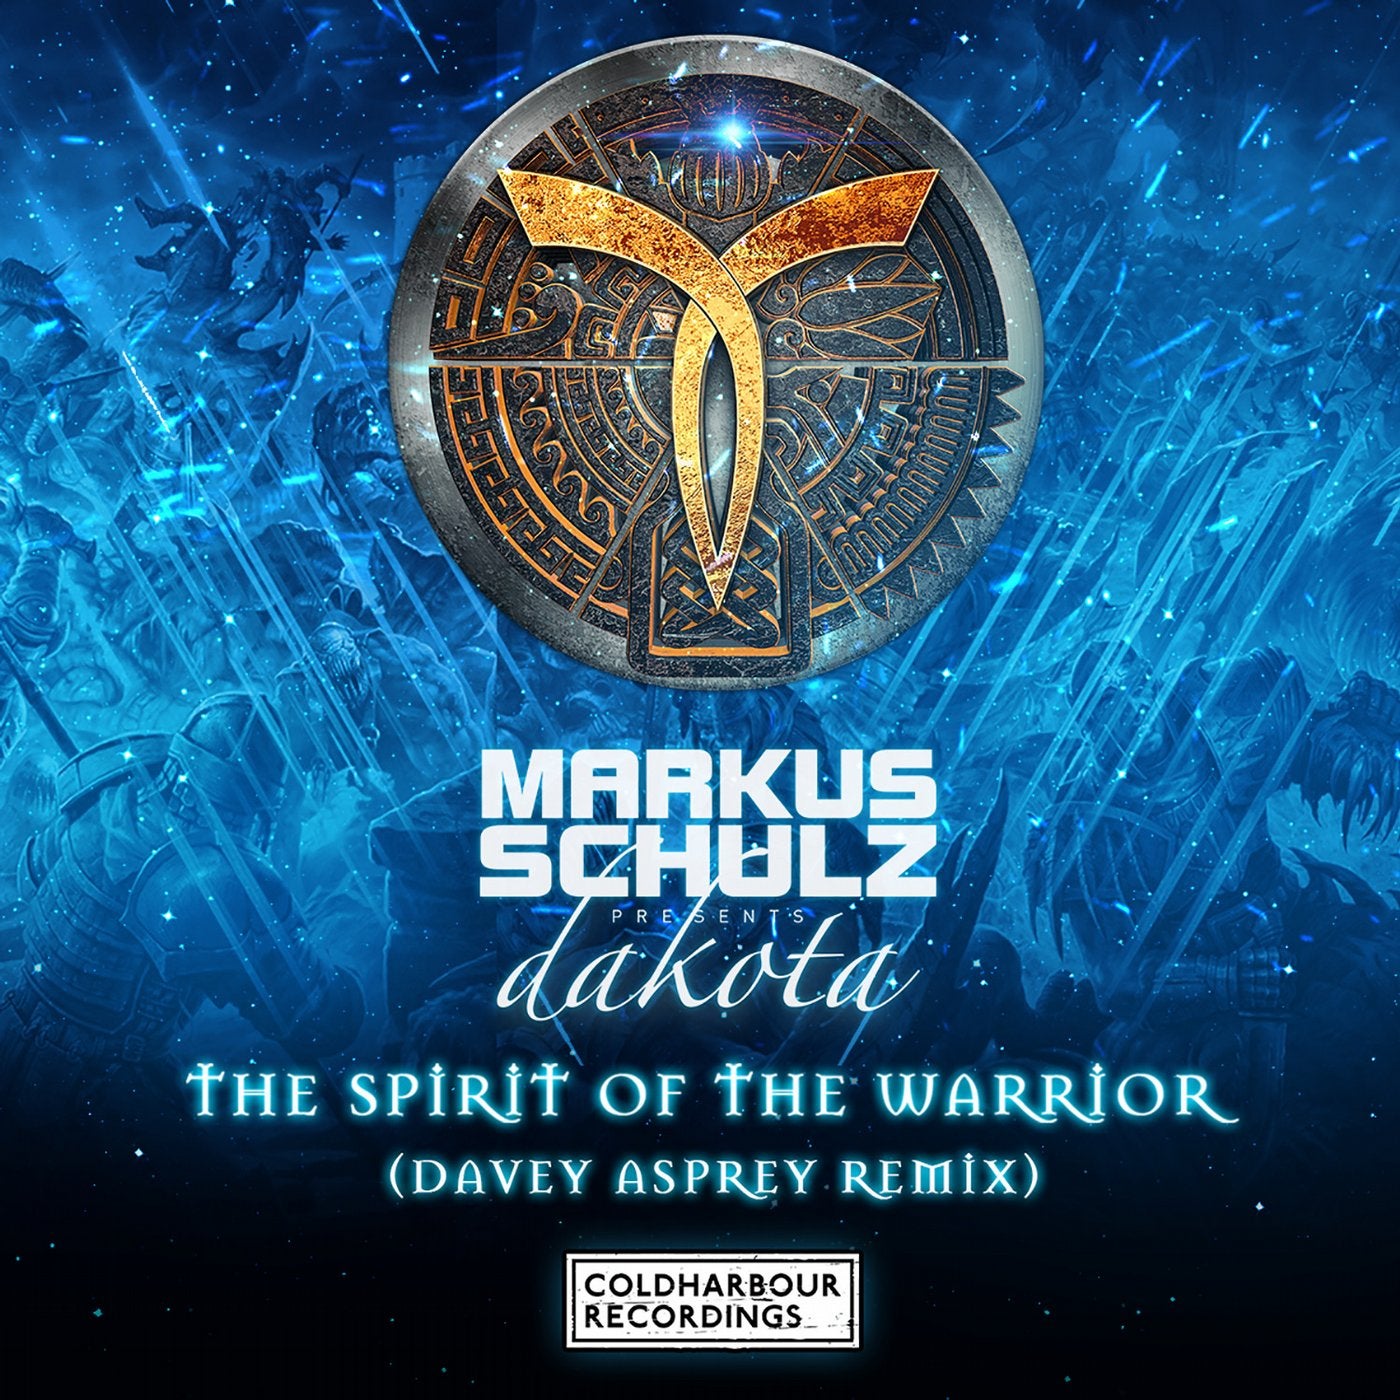 The Spirit of the Warrior - Davey Asprey Extended Remix